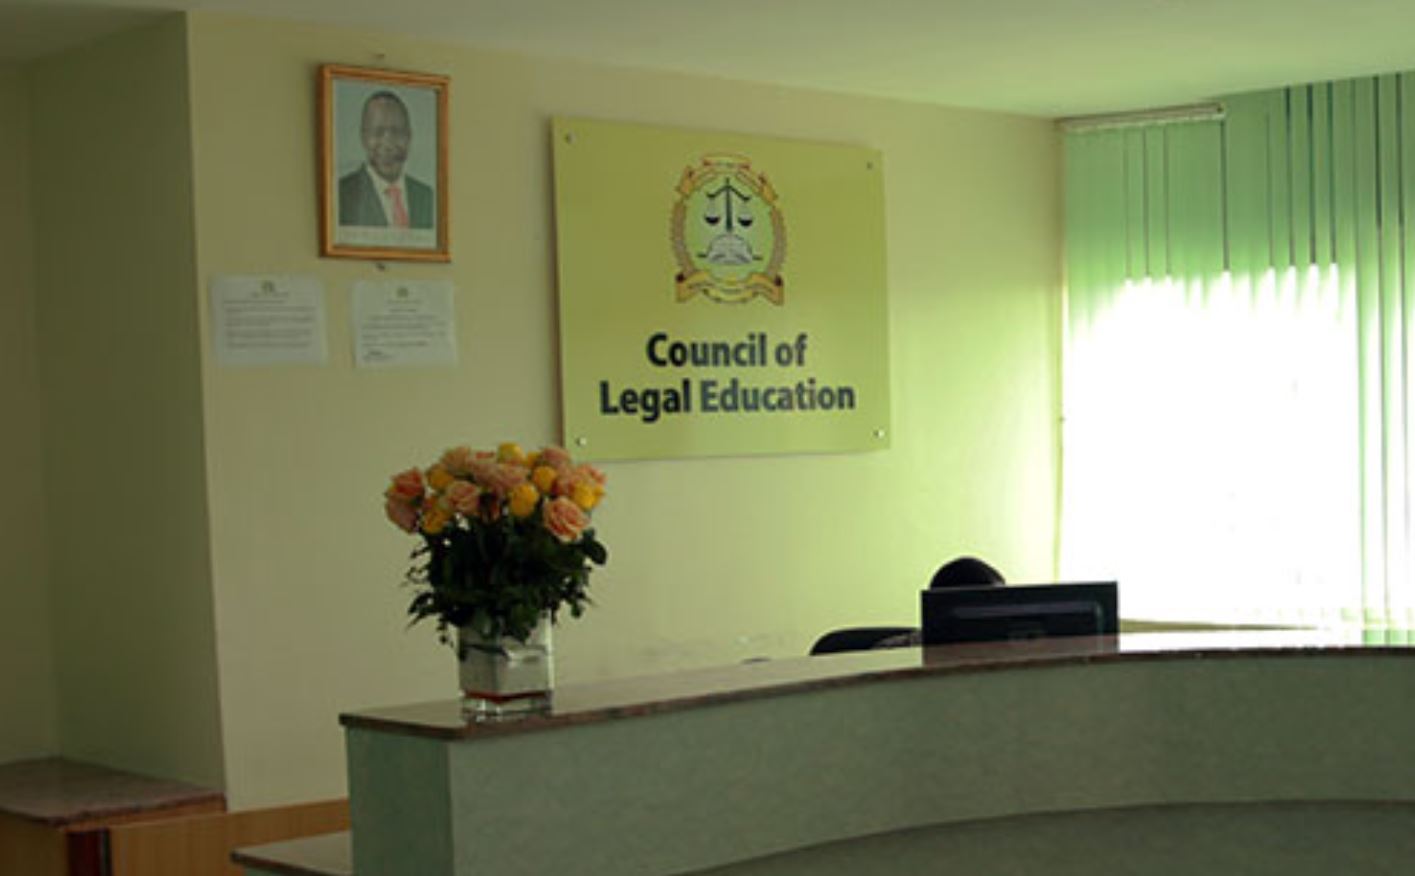 Council of Legal Education 2020 ATP exams registration dates